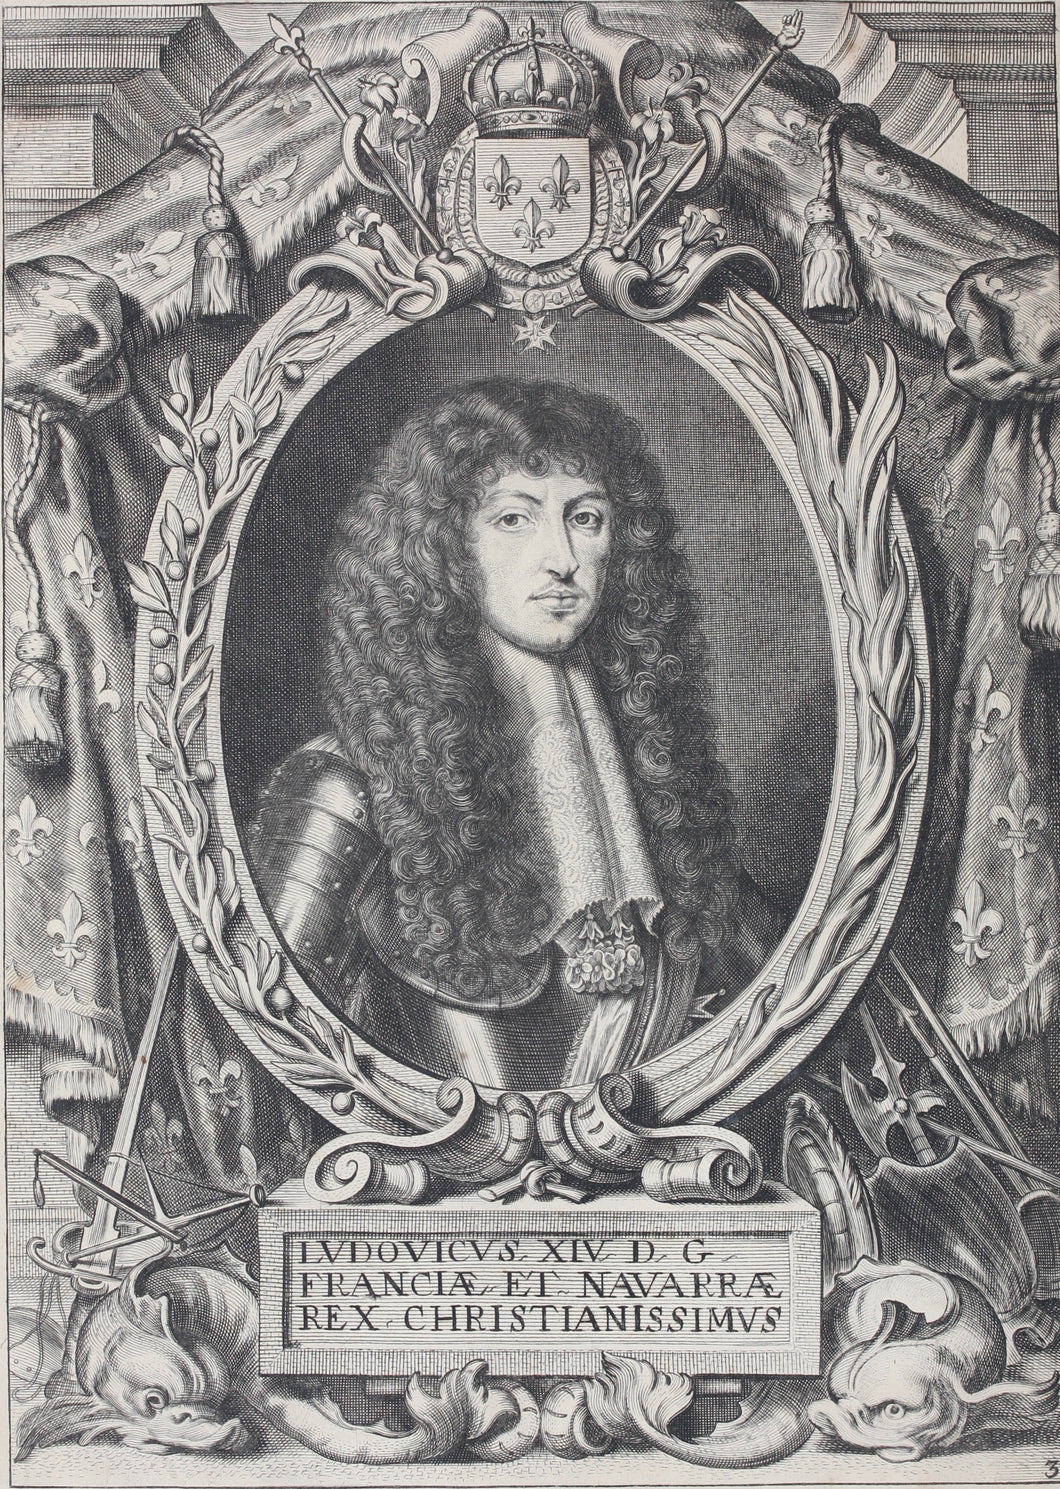 Anselm van Hulle, after. Portrait of Louis XIV. Engraving. C. 1697.